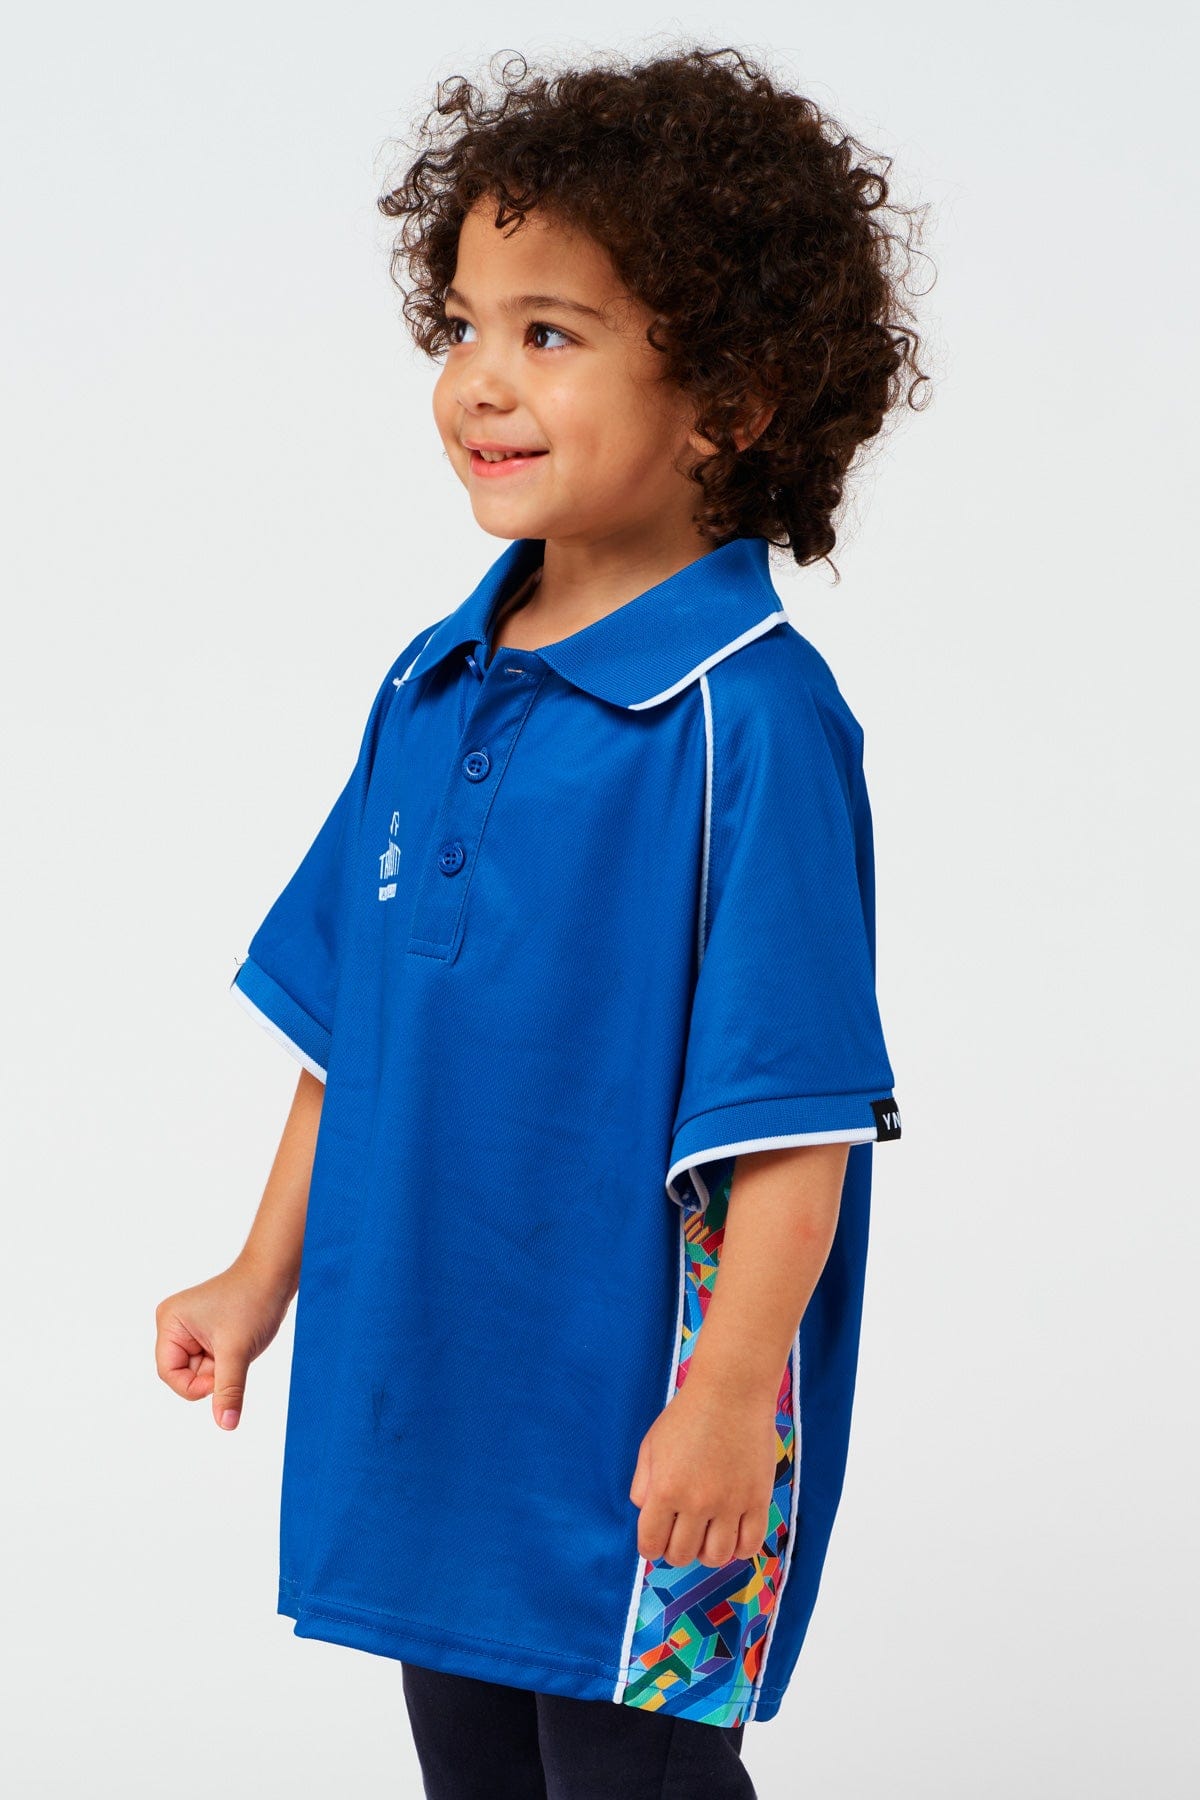 Kids Razzle Dazzle Blue Short Sleeve Polo